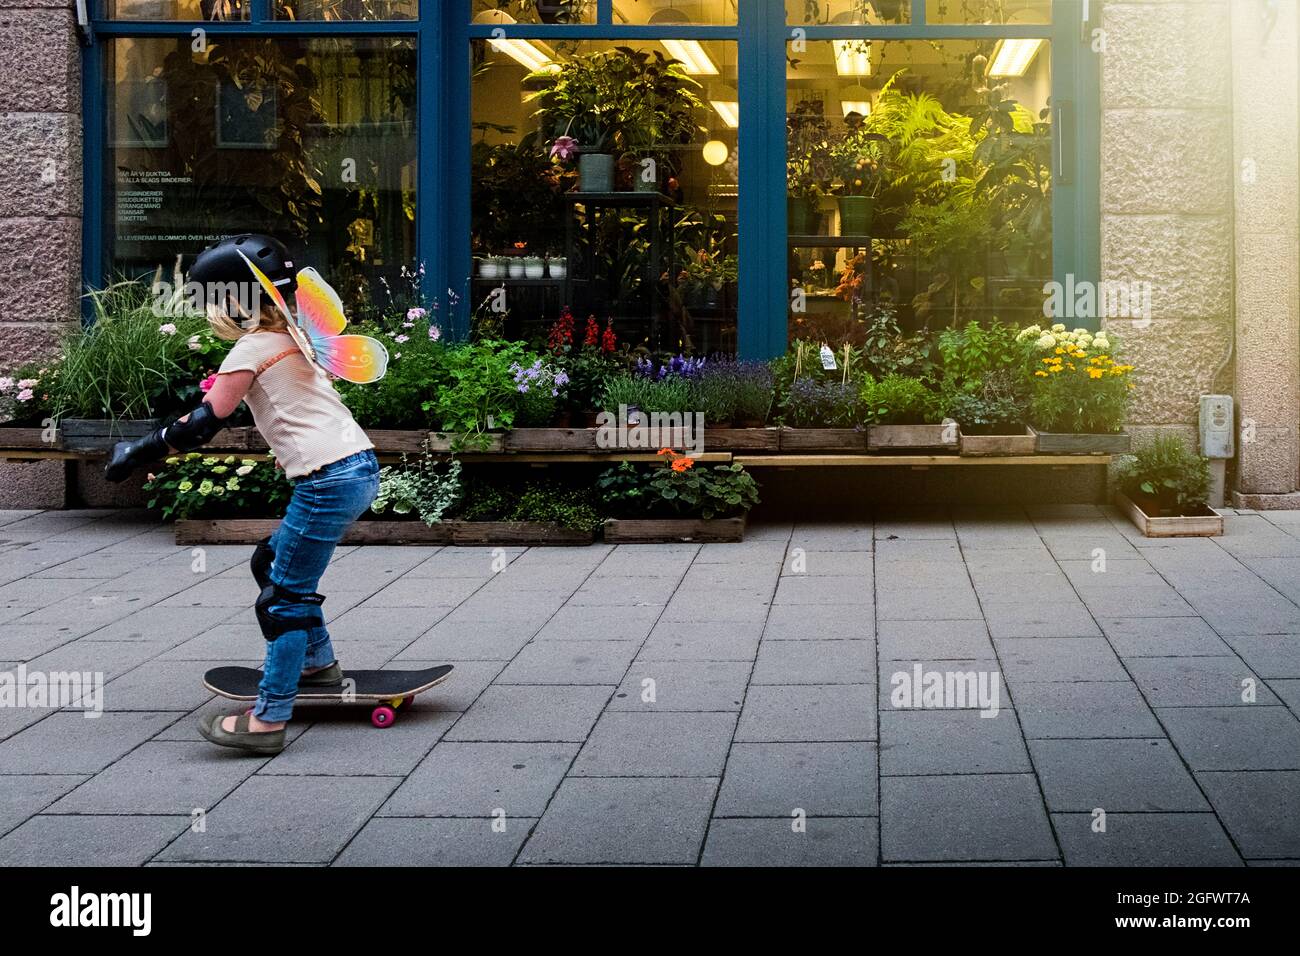 Girl skateboarding on sidewalk Stock Photo